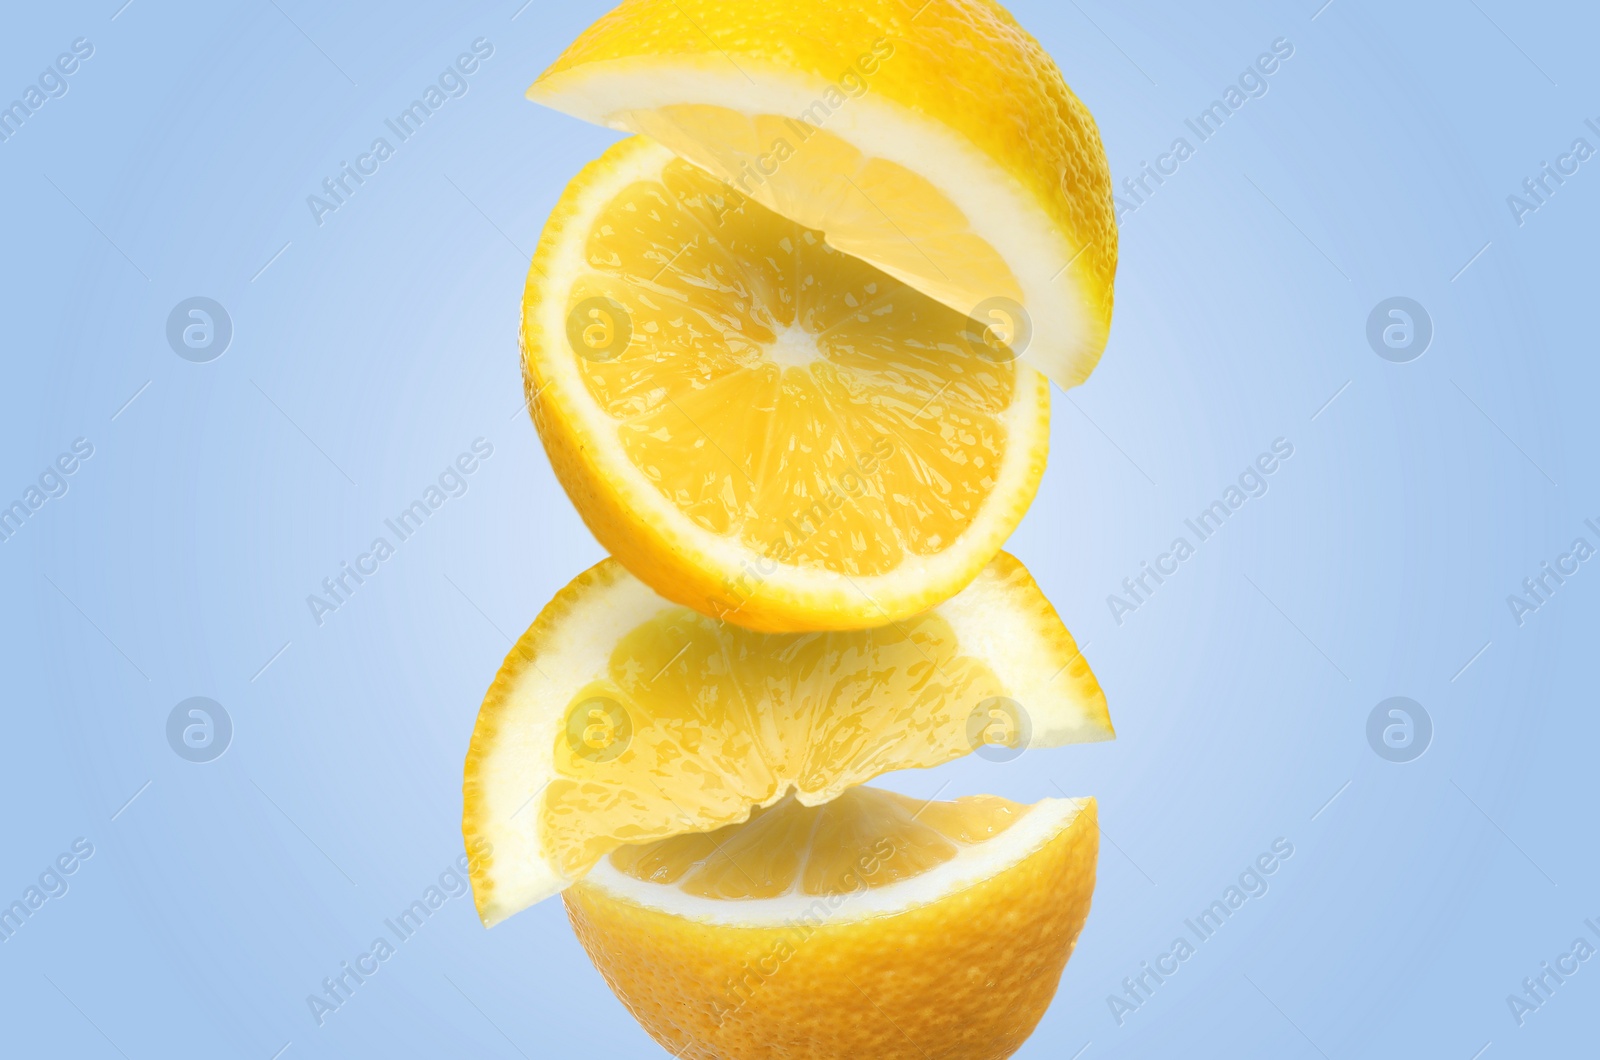 Image of Cut fresh lemons falling on light blue background